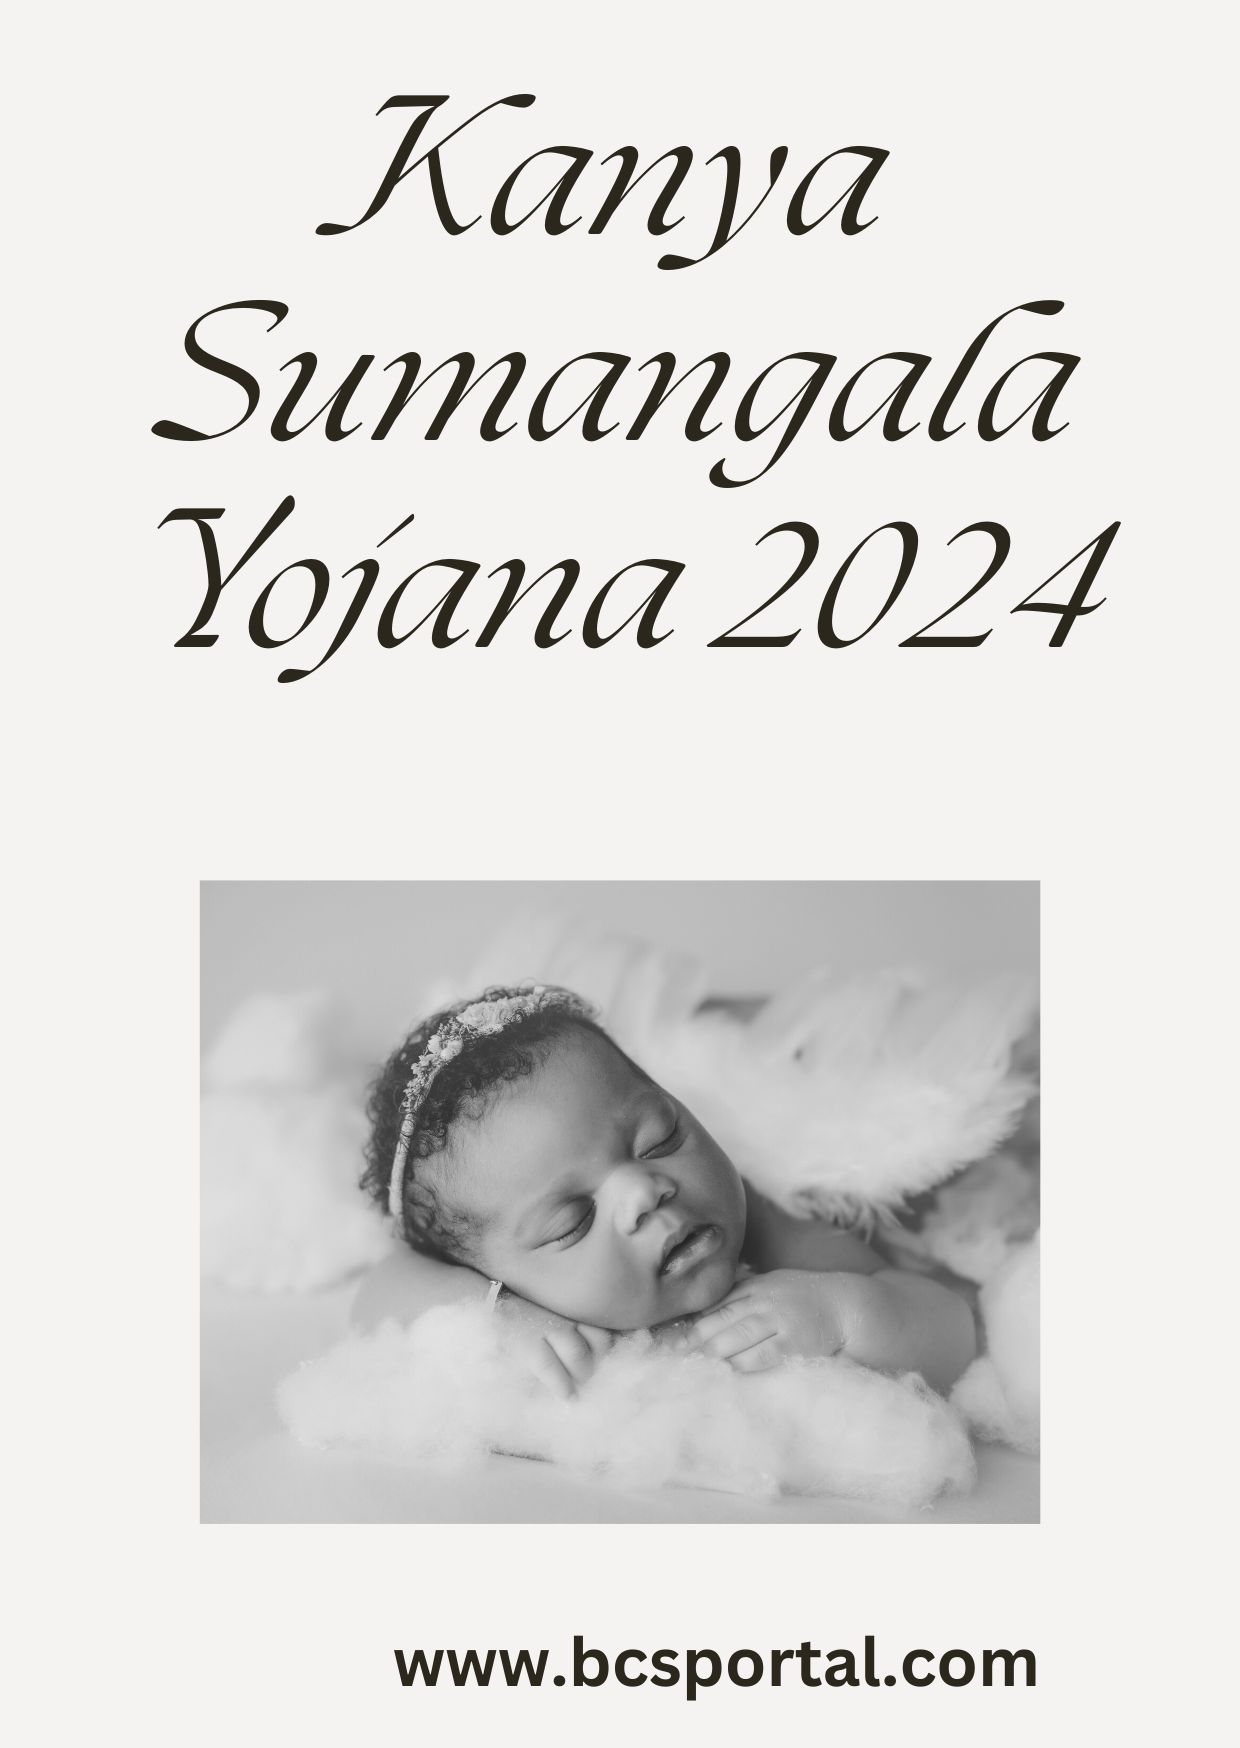 Kanya Sumangala Yojana 2024